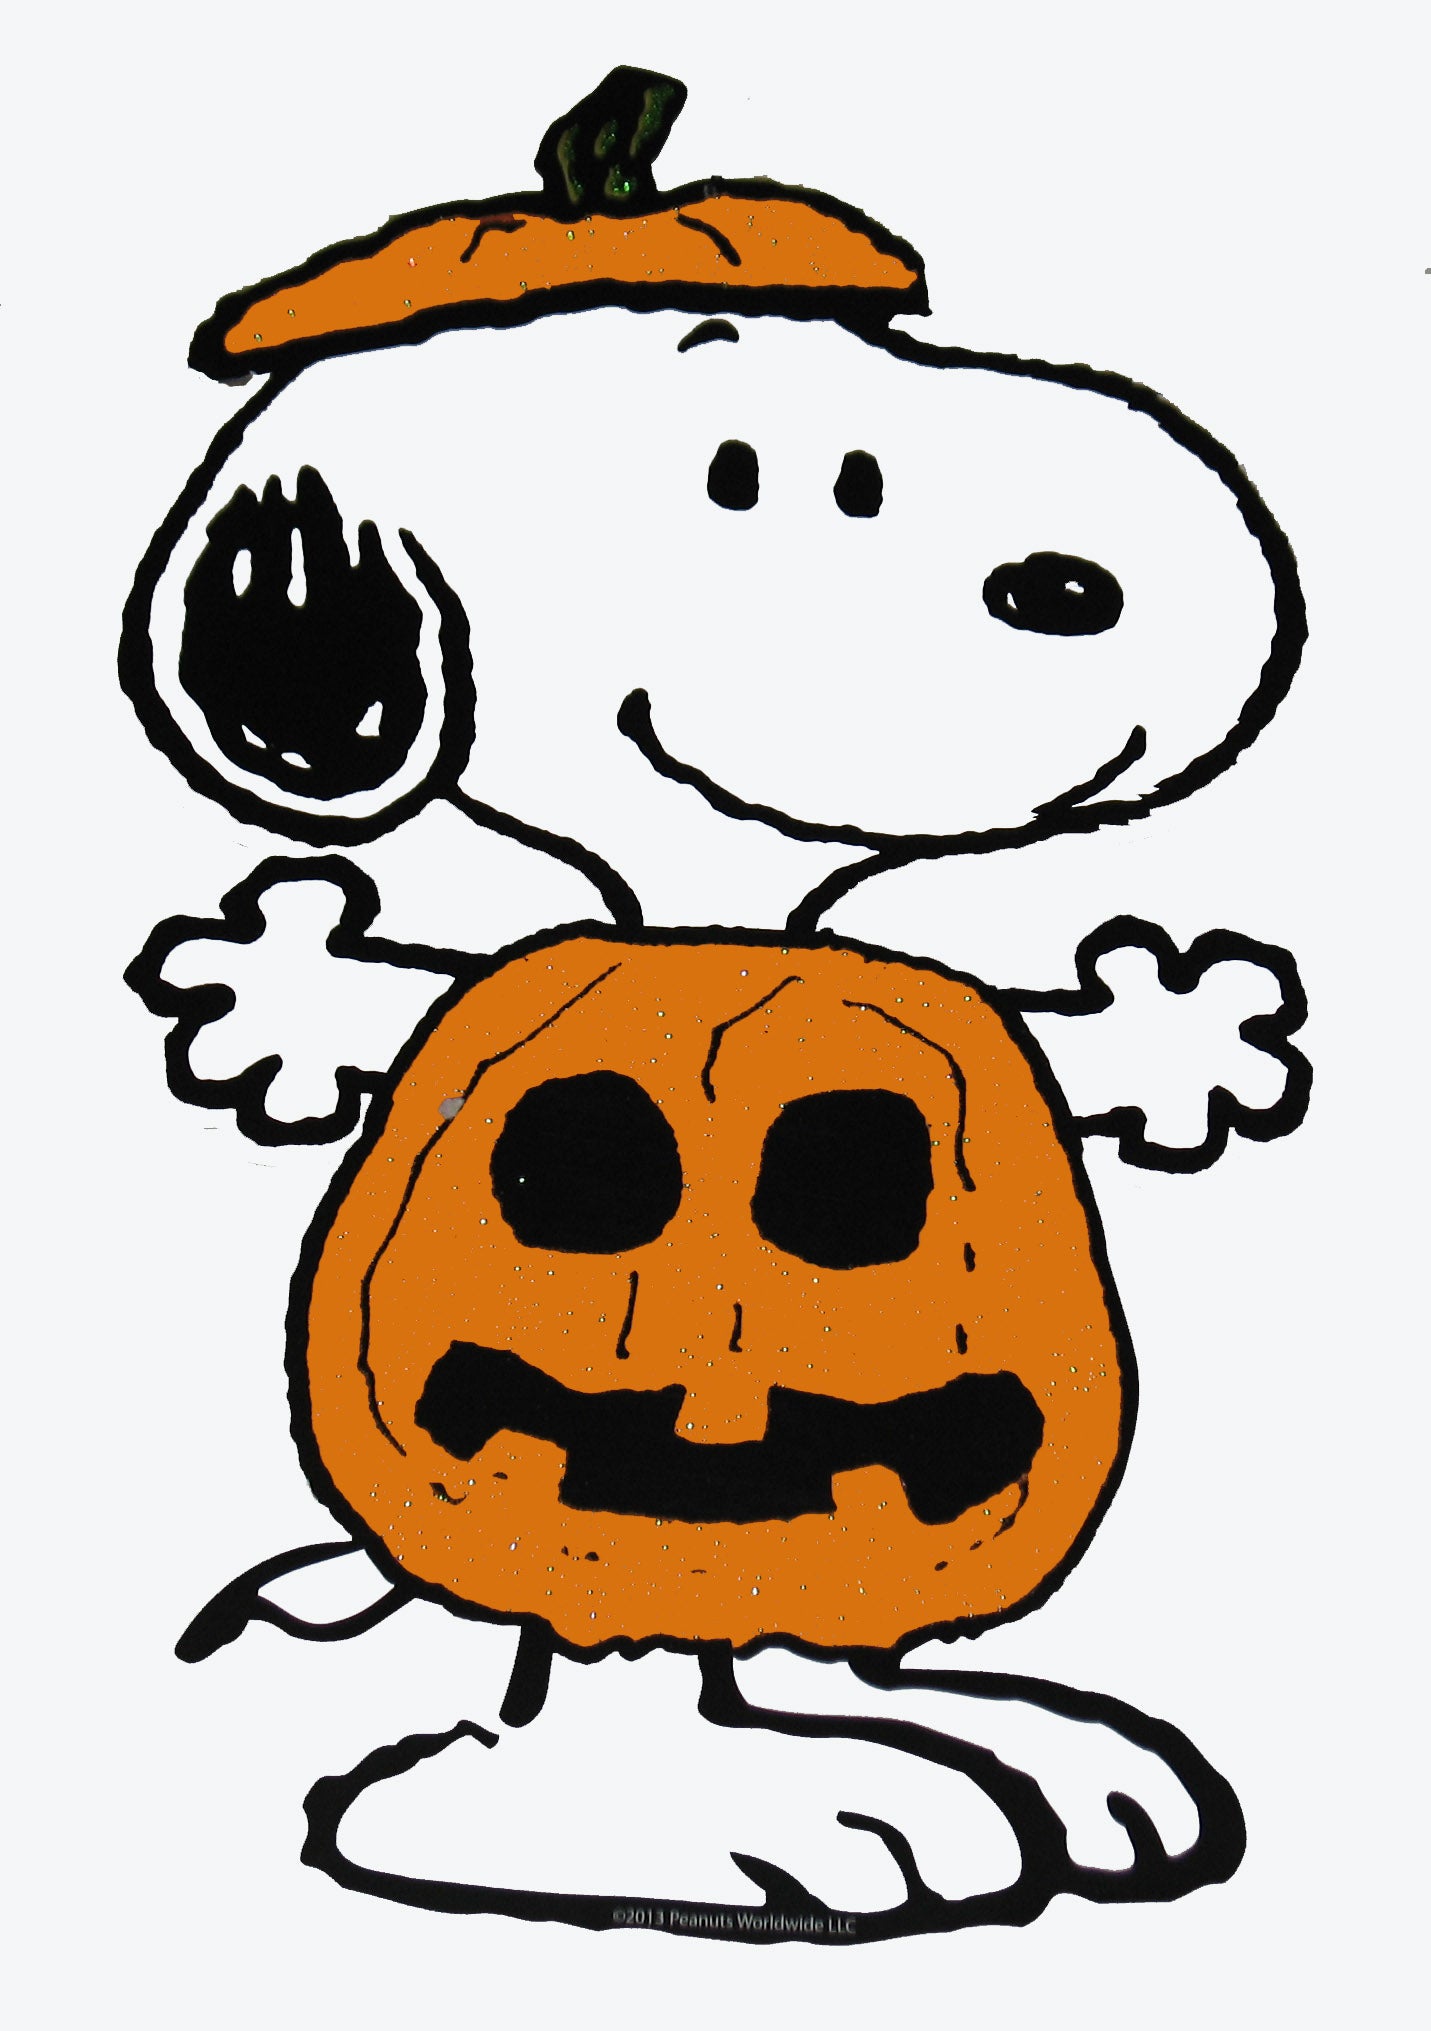 Peanuts Gang Sparkling Halloween Die-Cut Wall Decor - Snoopy ...